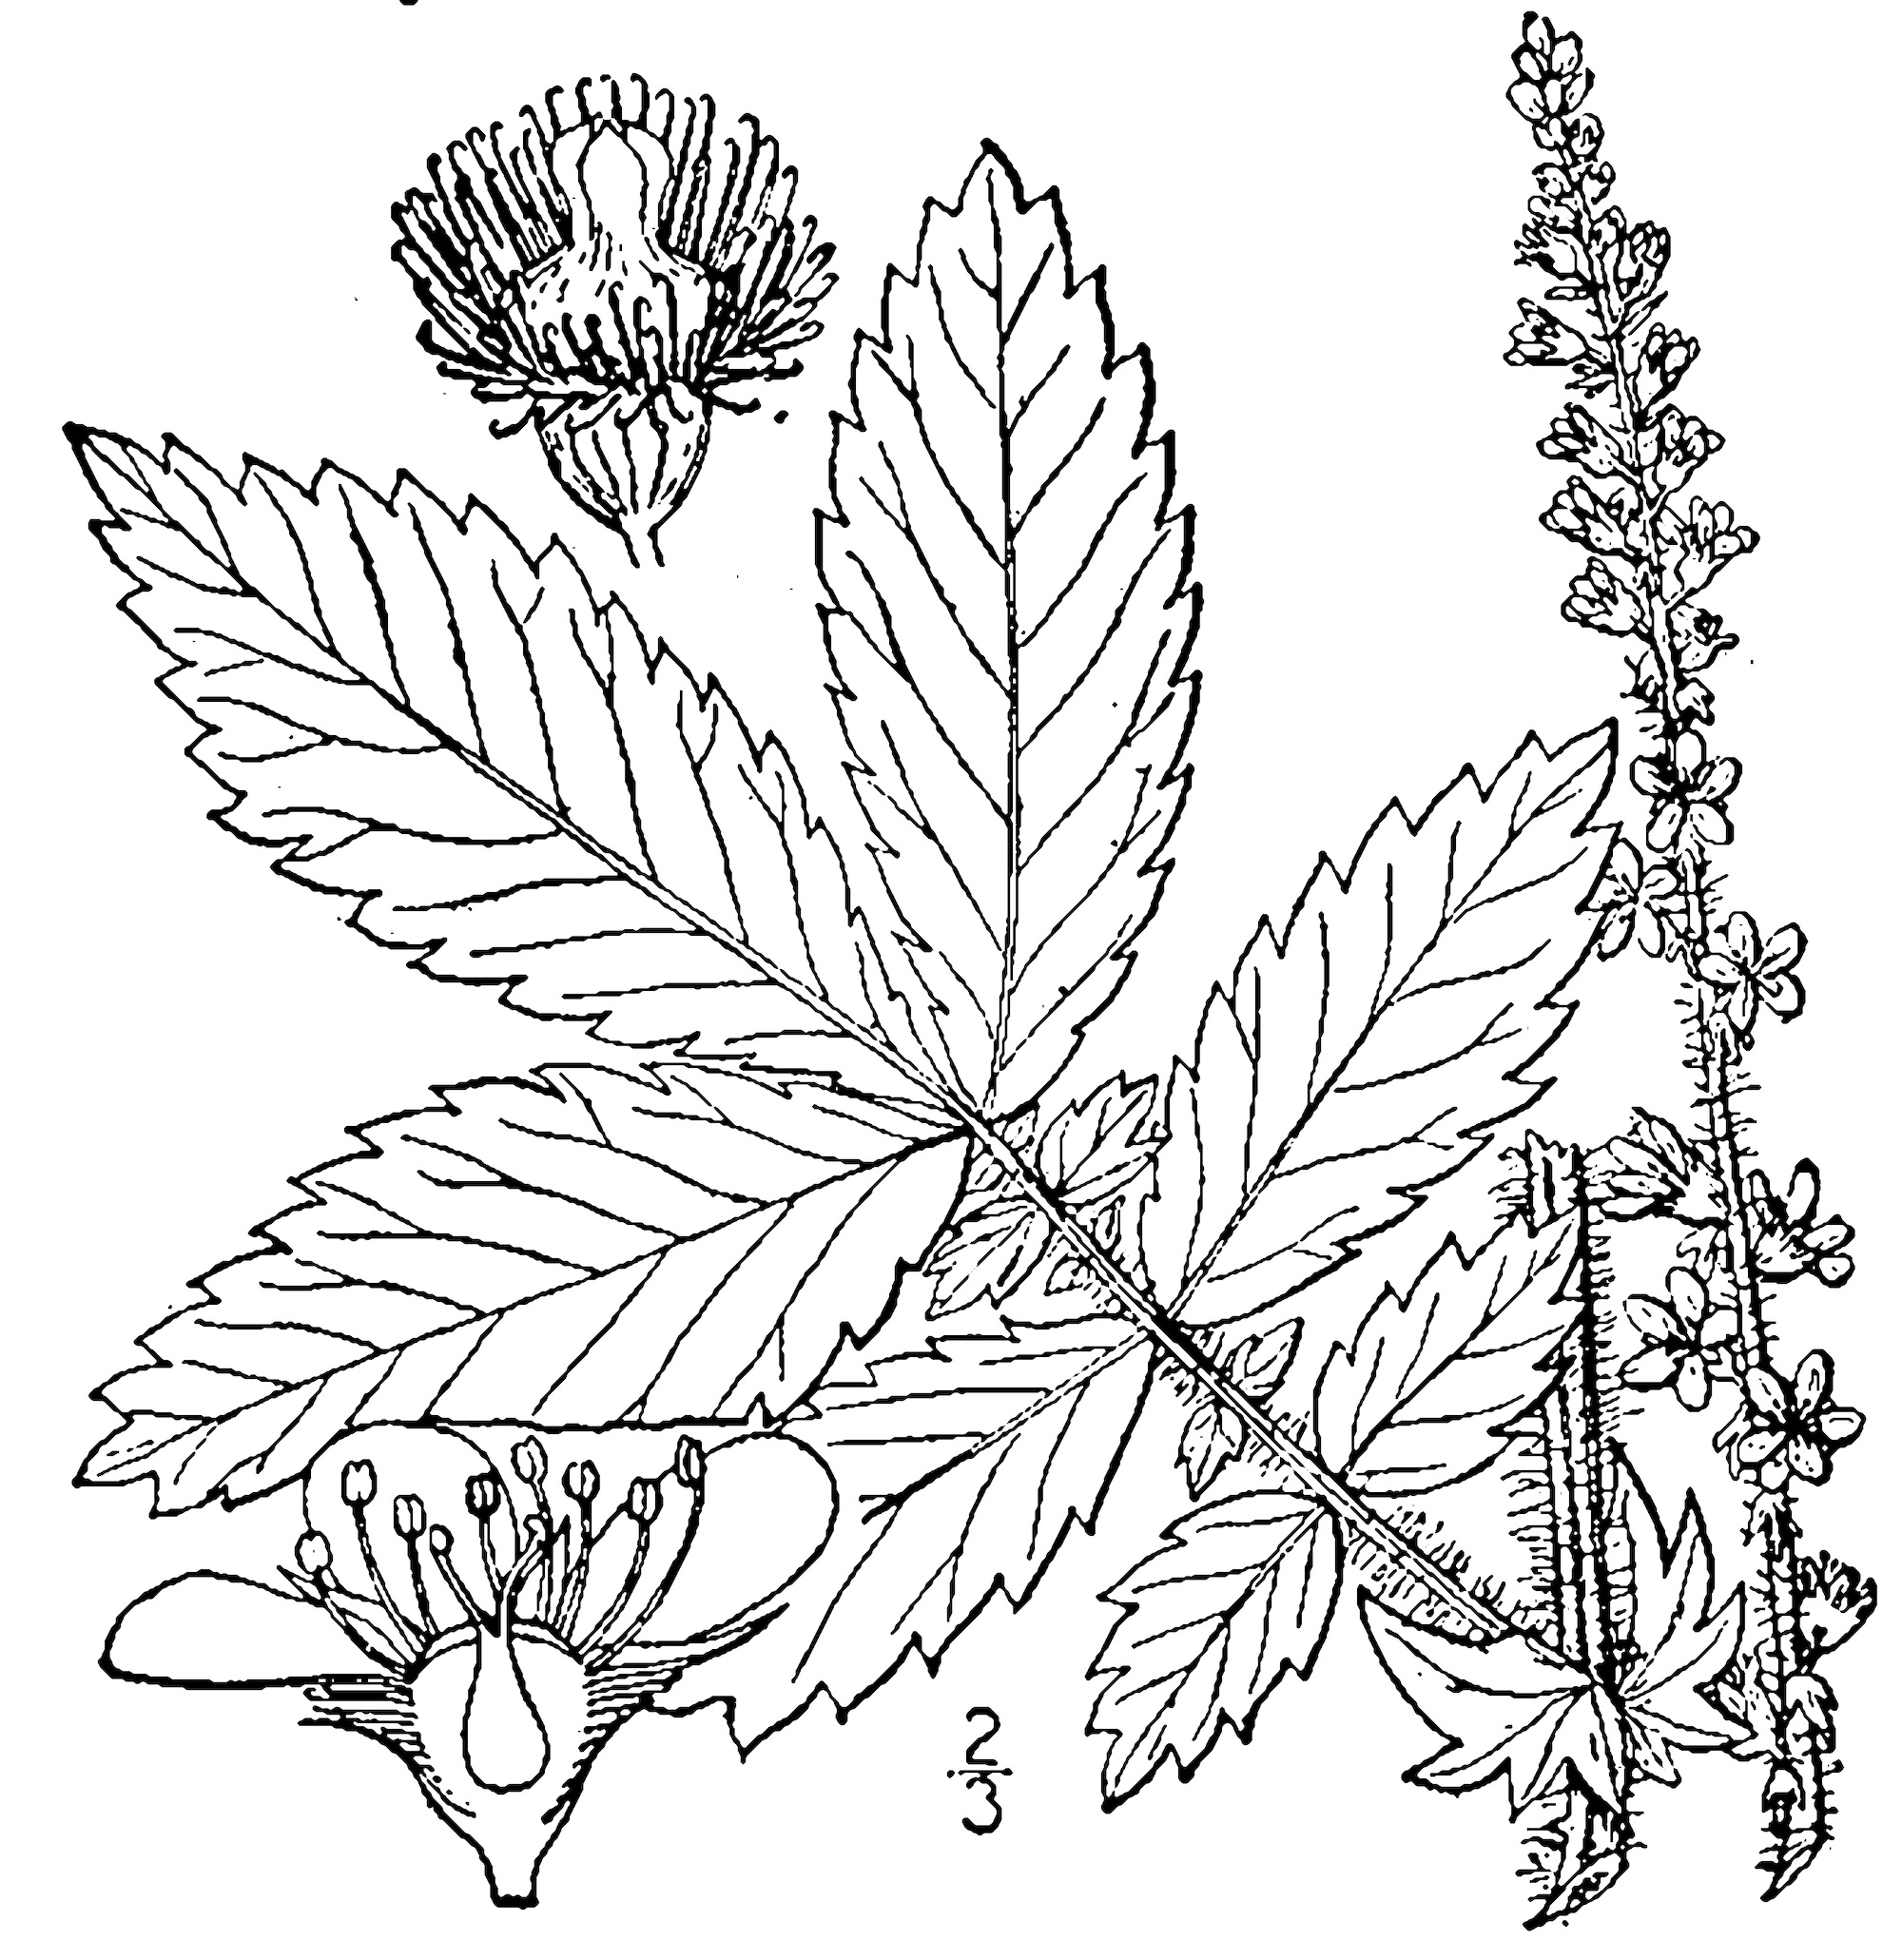 Tall Hairy Agrimony botanical illustration circa 1913.